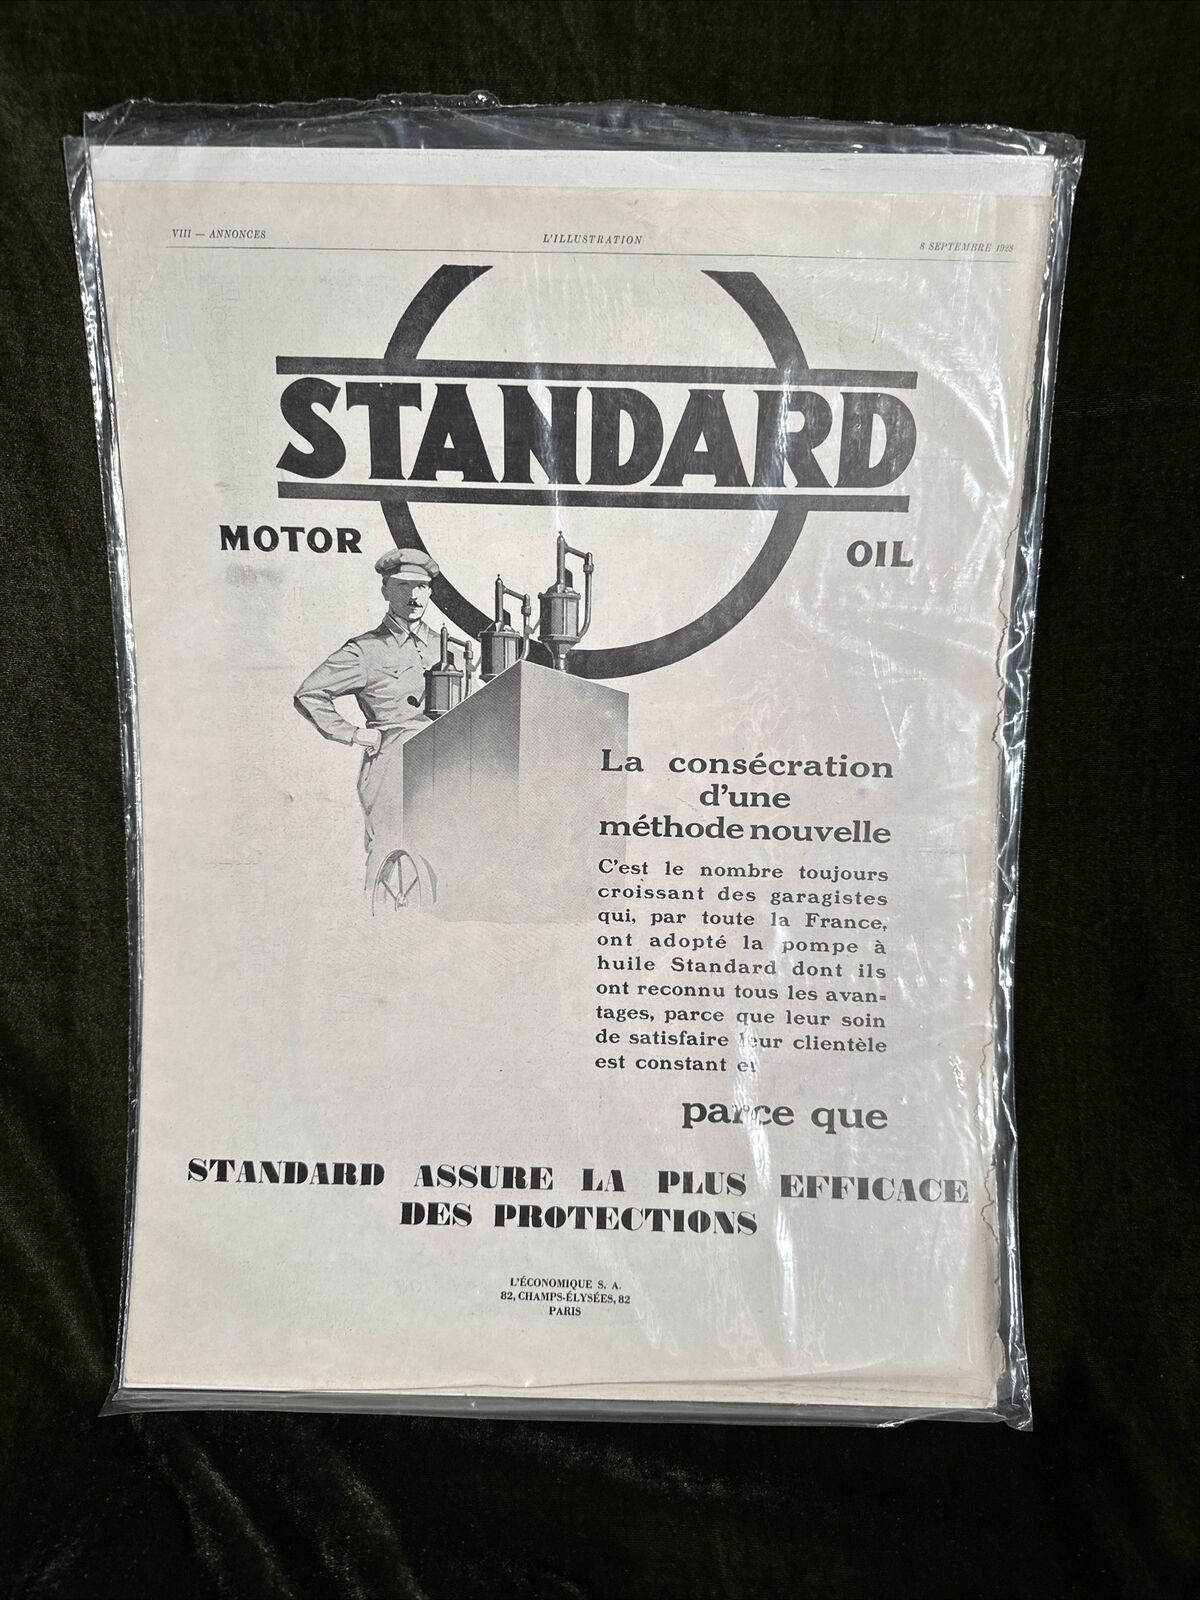 ☮️ 1928 STANDARD MOTOR OIL ADVERTISEMENT - FROM PARIS FRANCE